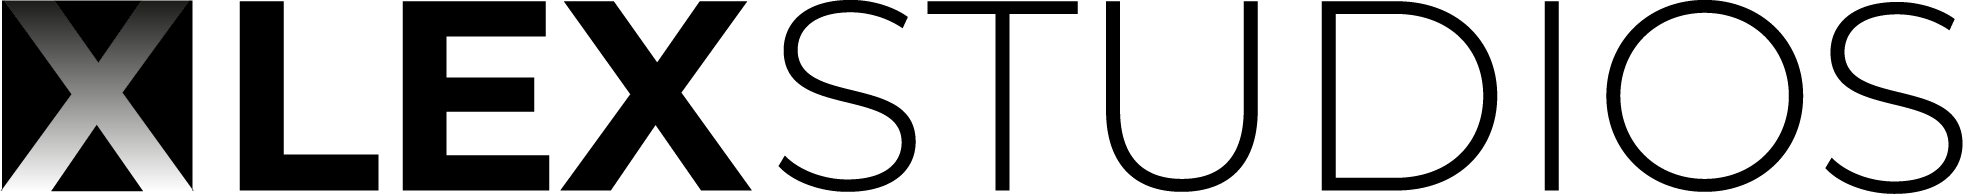 LEXSTUDIOS Logo schwarz - another level